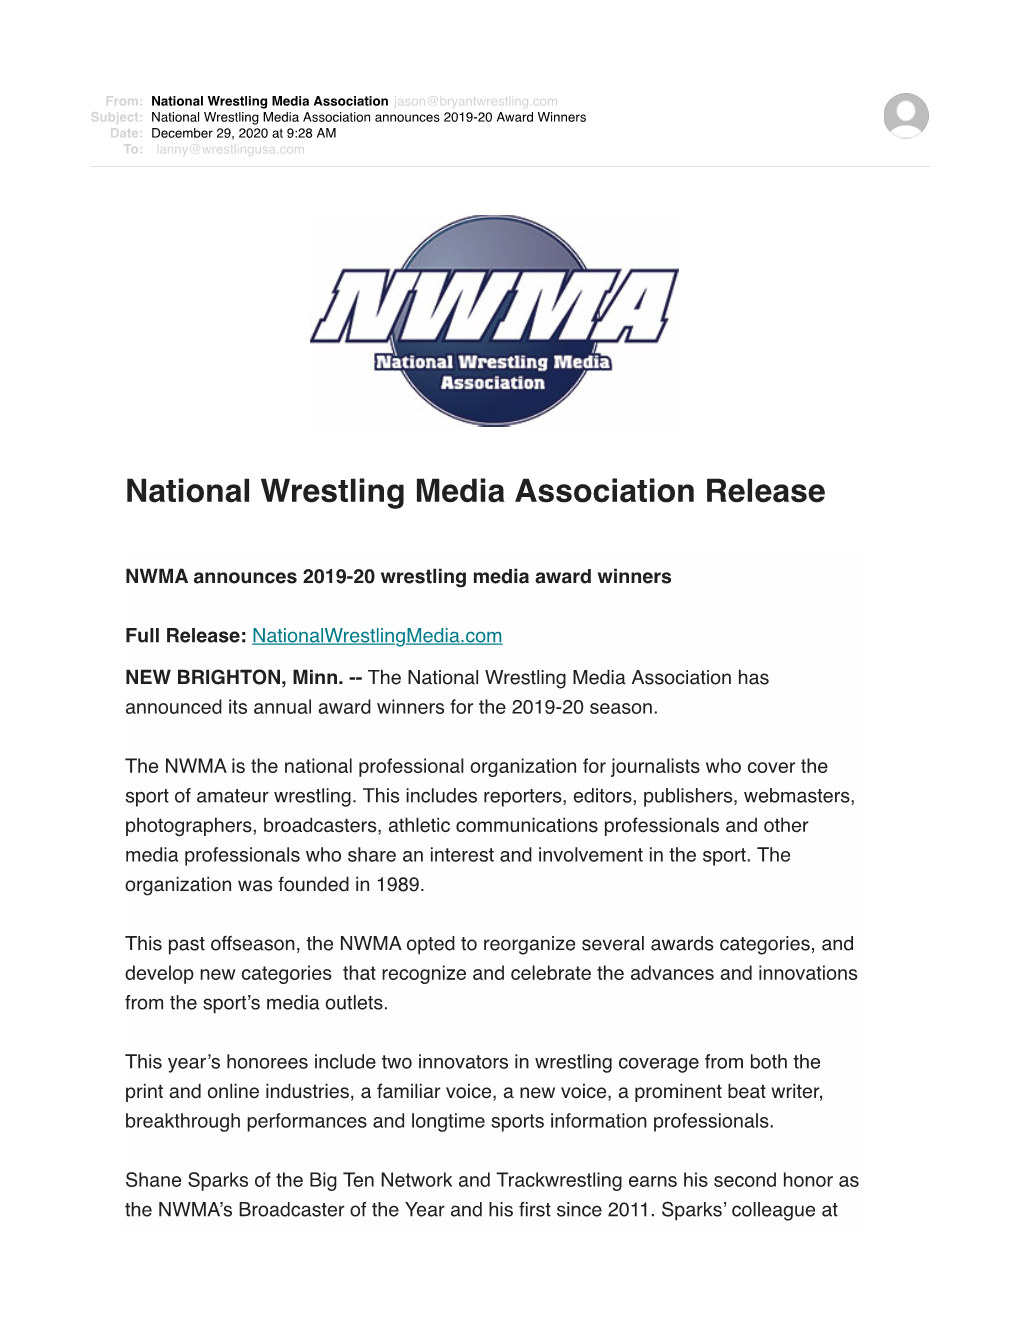 National Wrestling Media Association Announces 201920 Award Winners